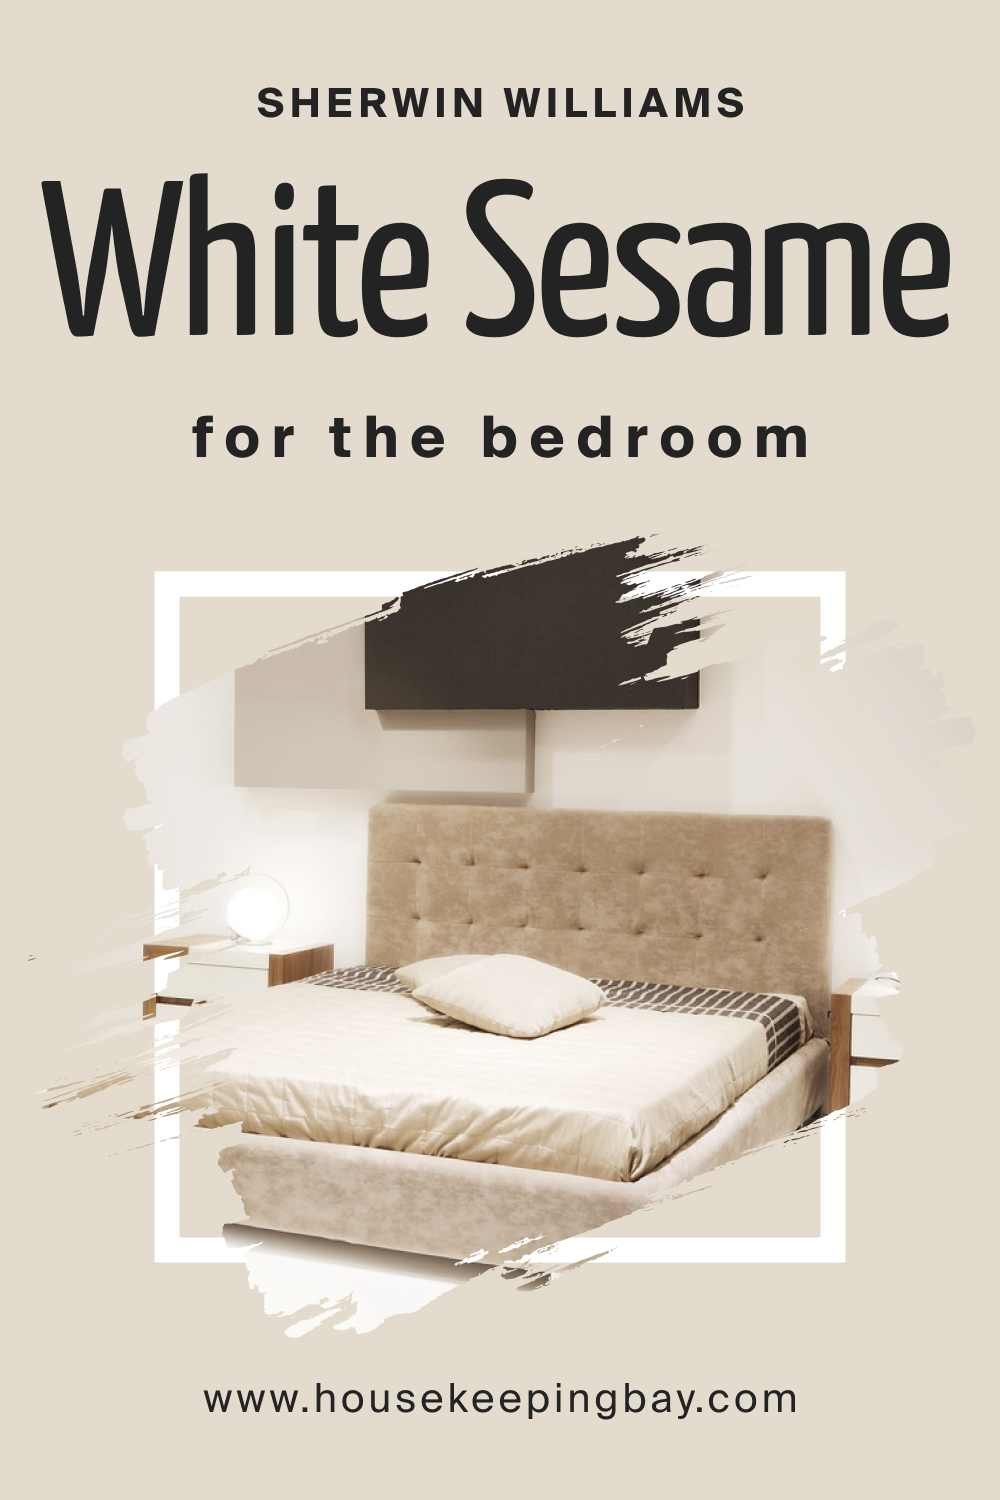 Sherwin Williams. SW 9586 White Sesame For the bedroom